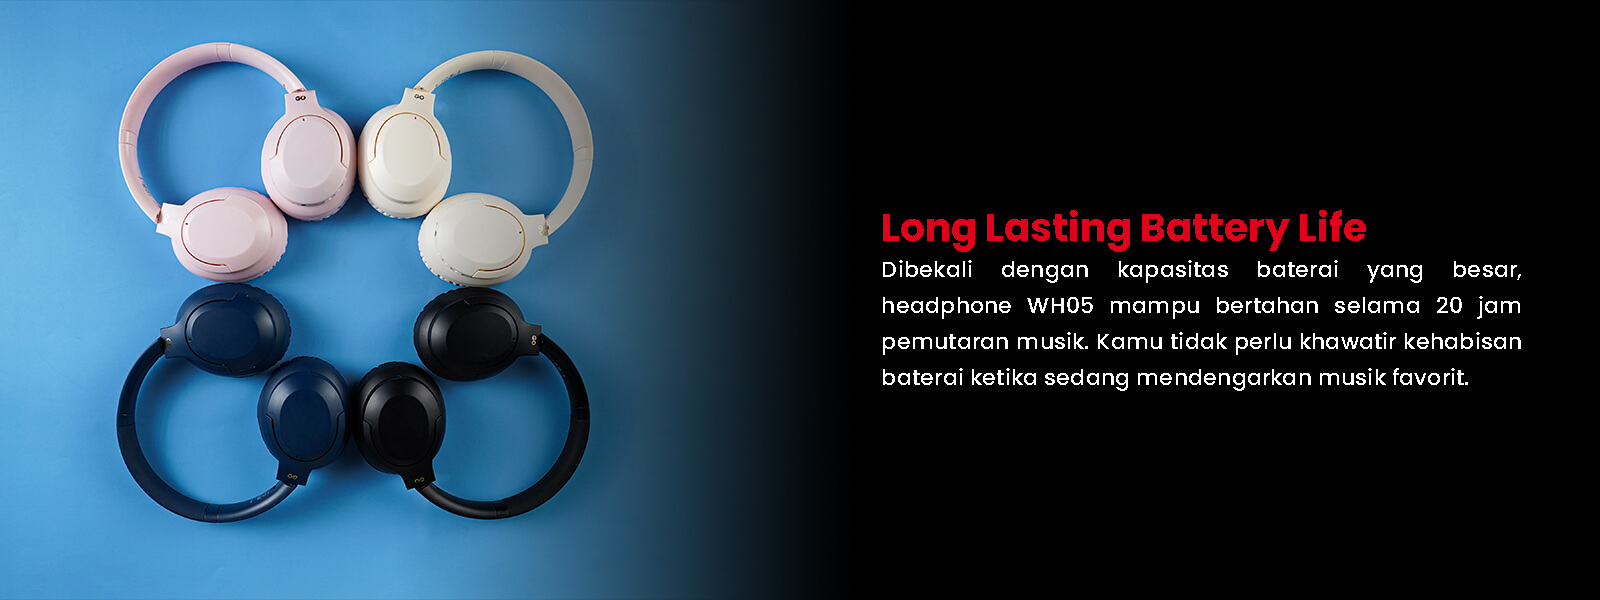 Headphone Bluetooth Wh05 Long Lasting Battery Life